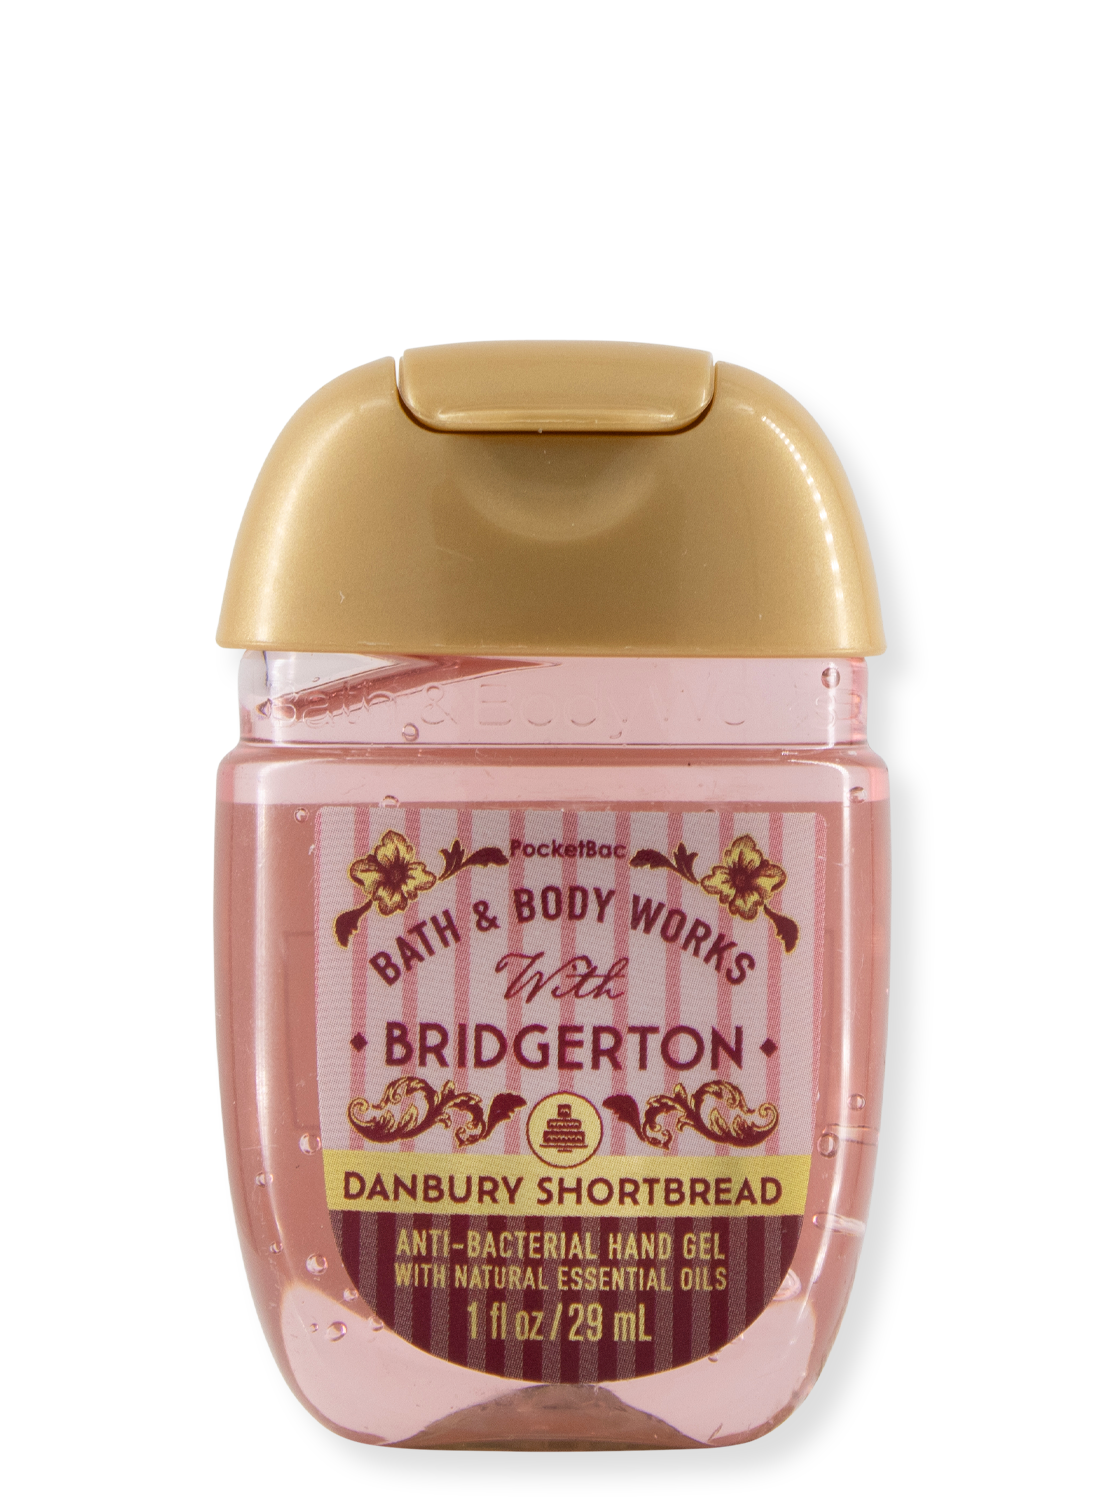 Hand disinfection gel - Bridgerton Danbury Shortbread - Limited Edition - 29ml